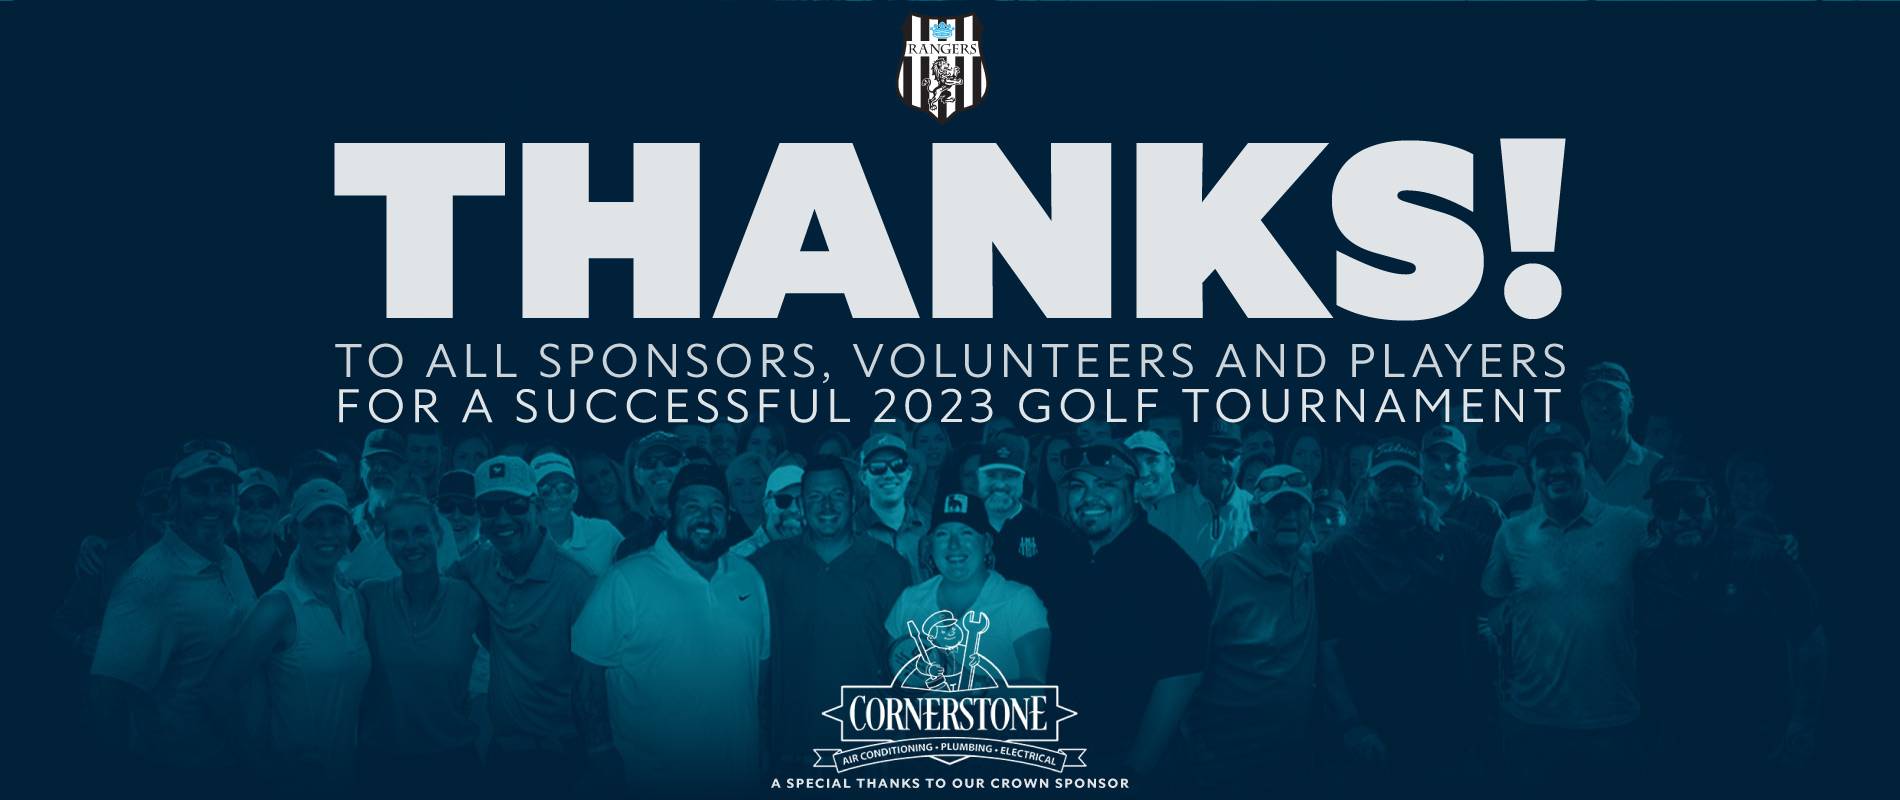 2023 Golf Tournament Thanks